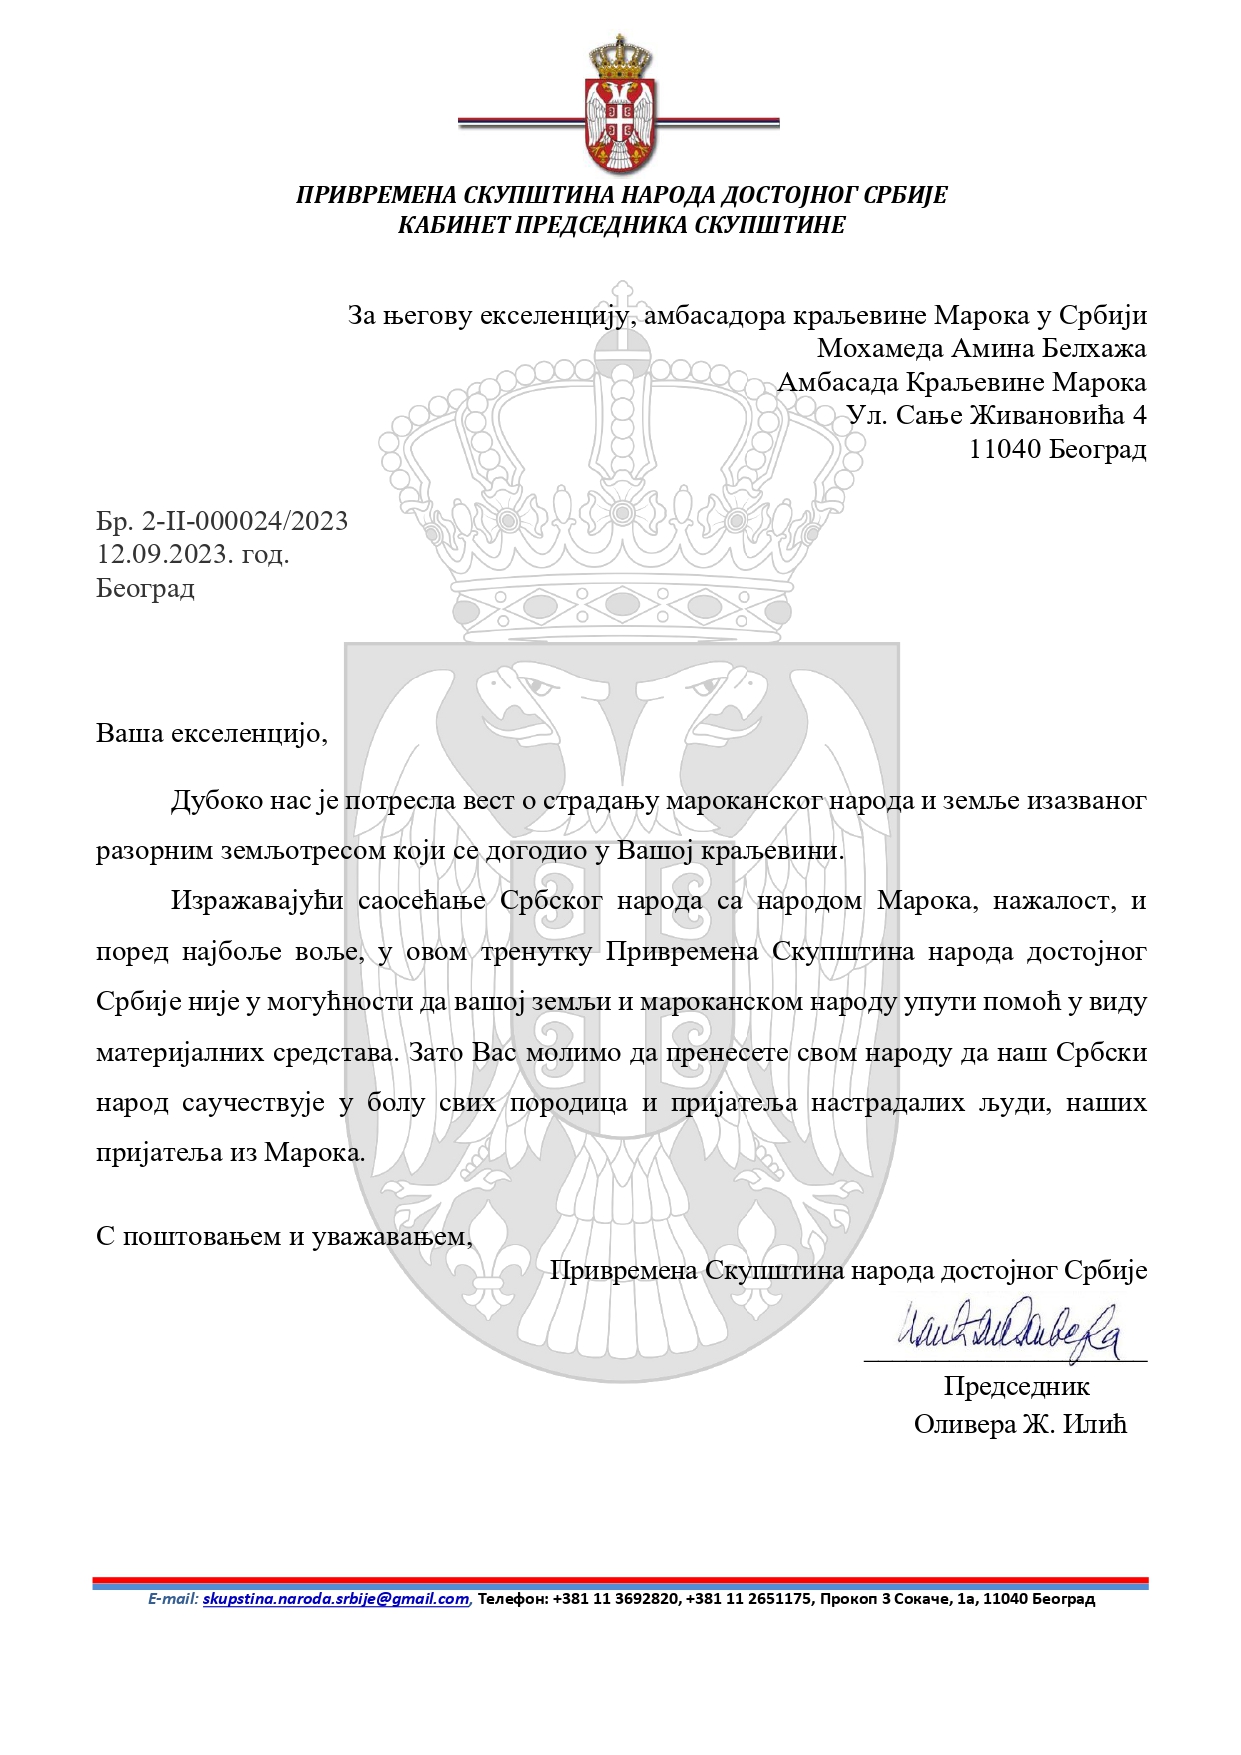 Бр. 2-II-000024-2023, писмо амбасадору краљевине Марока у Србији, Мохамед Амин Белхаж